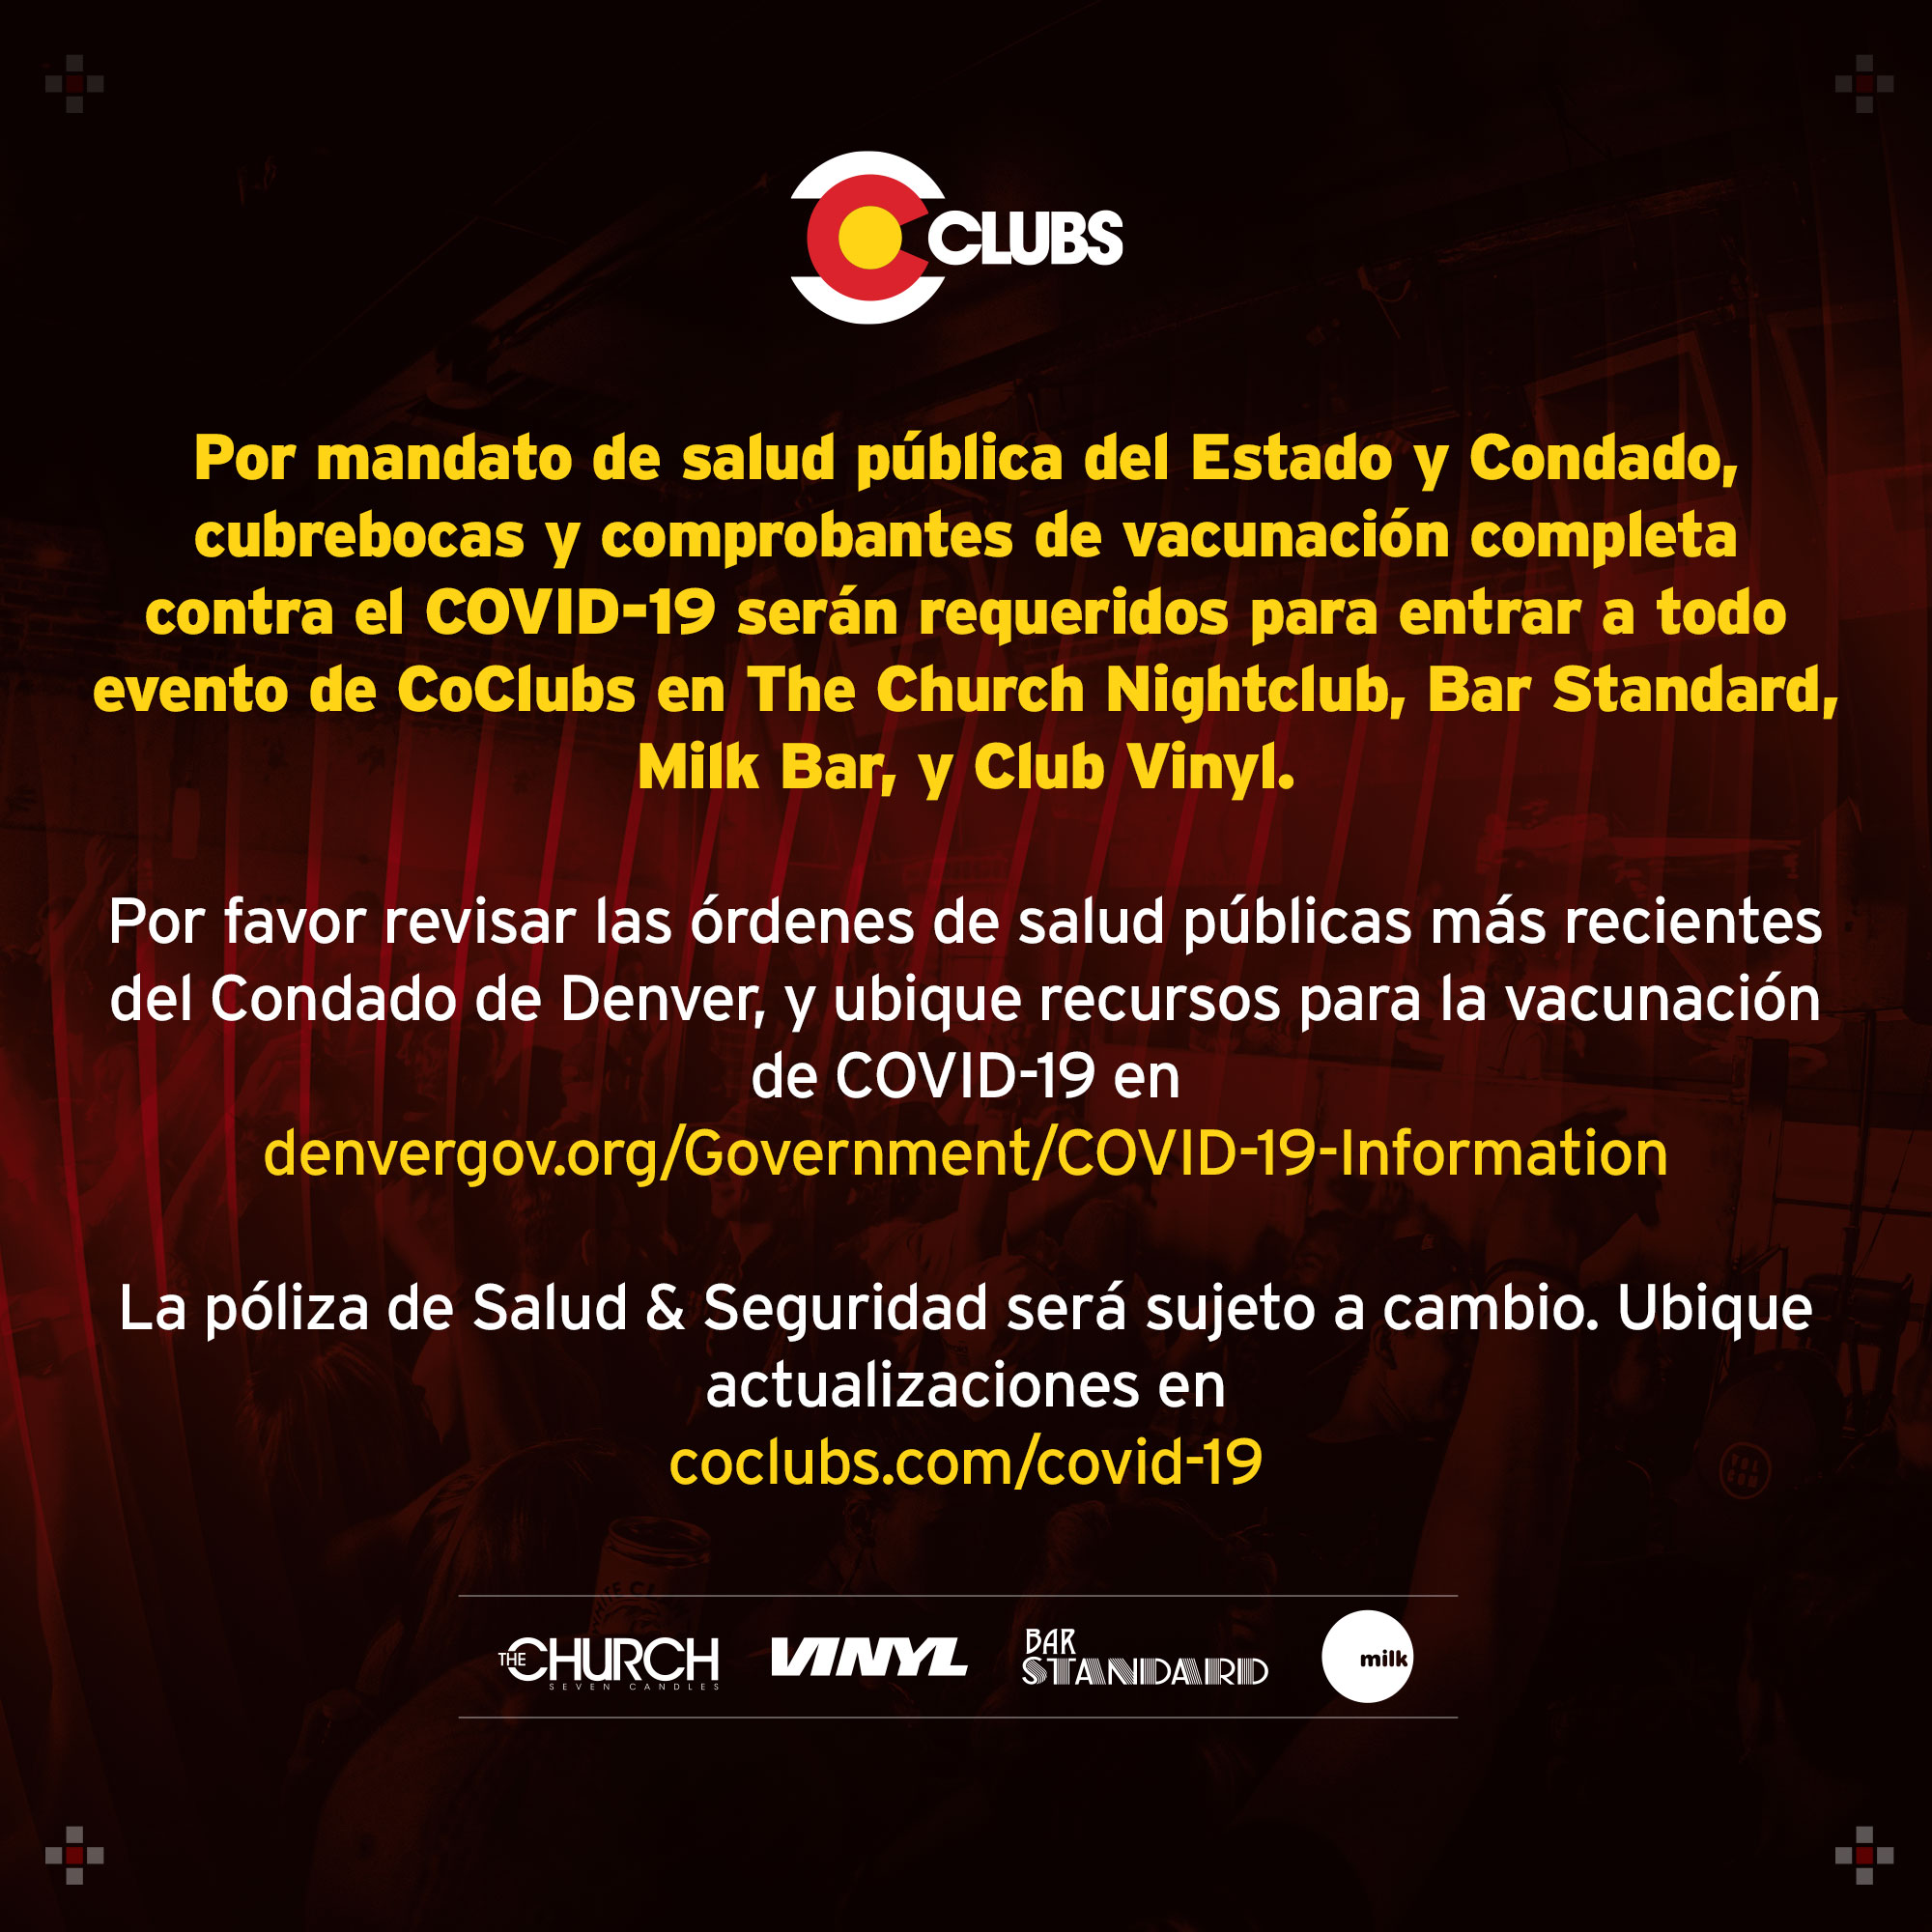 New_Clubs_CovidMandate_square_v2_Spanish.jpg